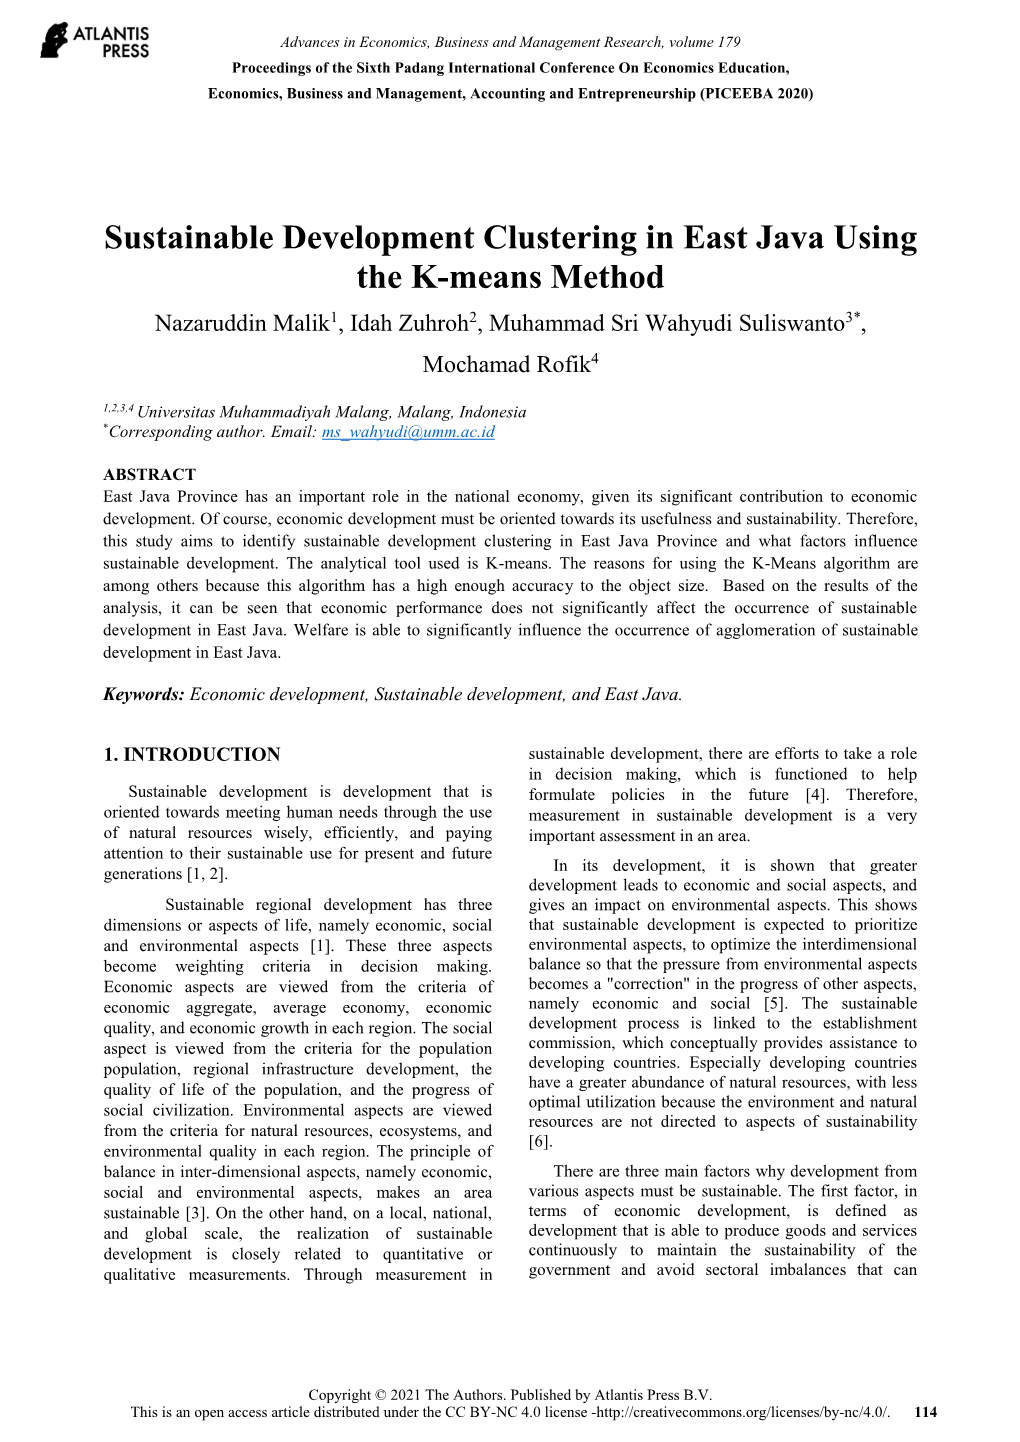 Sustainable Development Clustering in East Java Using the K-Means Method Nazaruddin Malik1, Idah Zuhroh2, Muhammad Sri Wahyudi Suliswanto3*, Mochamad Rofik4